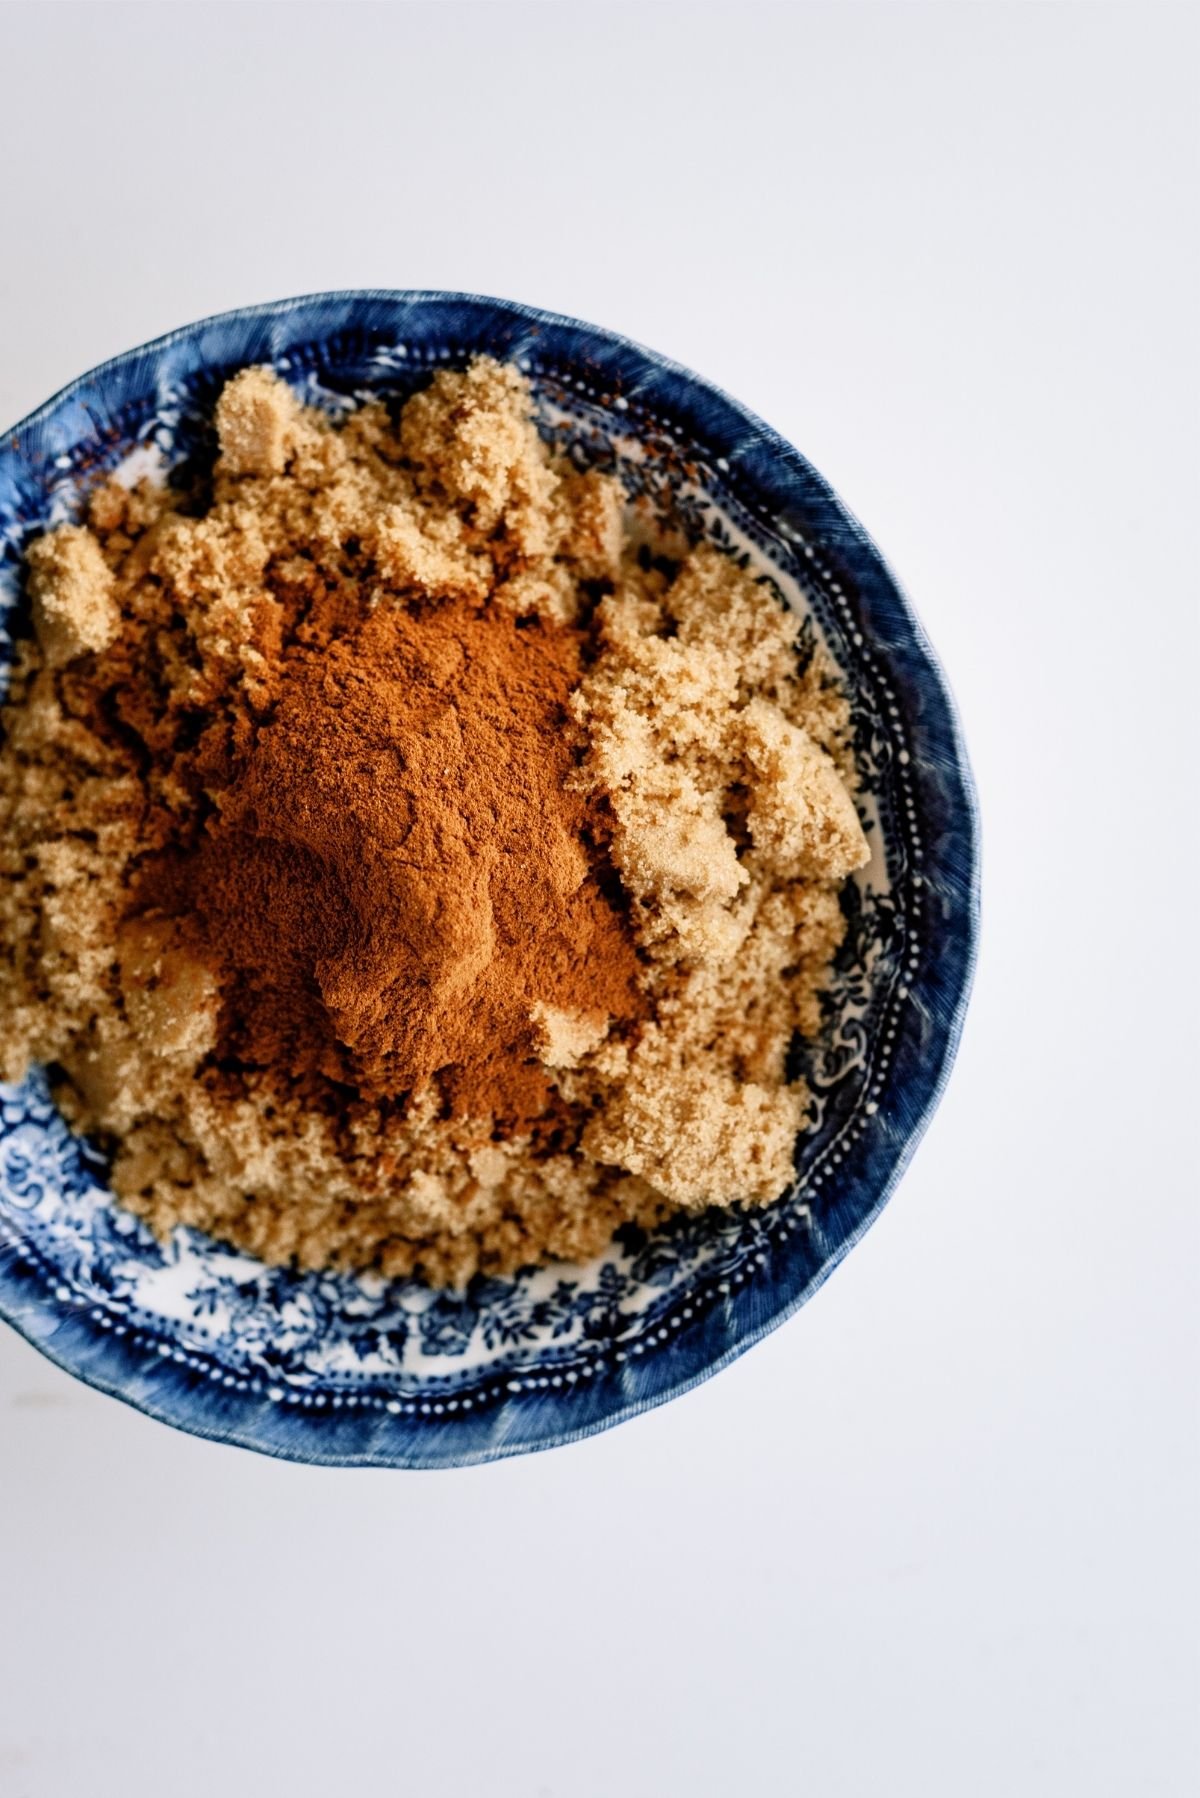 Cinnamon and brown sugar mixture in a bowl